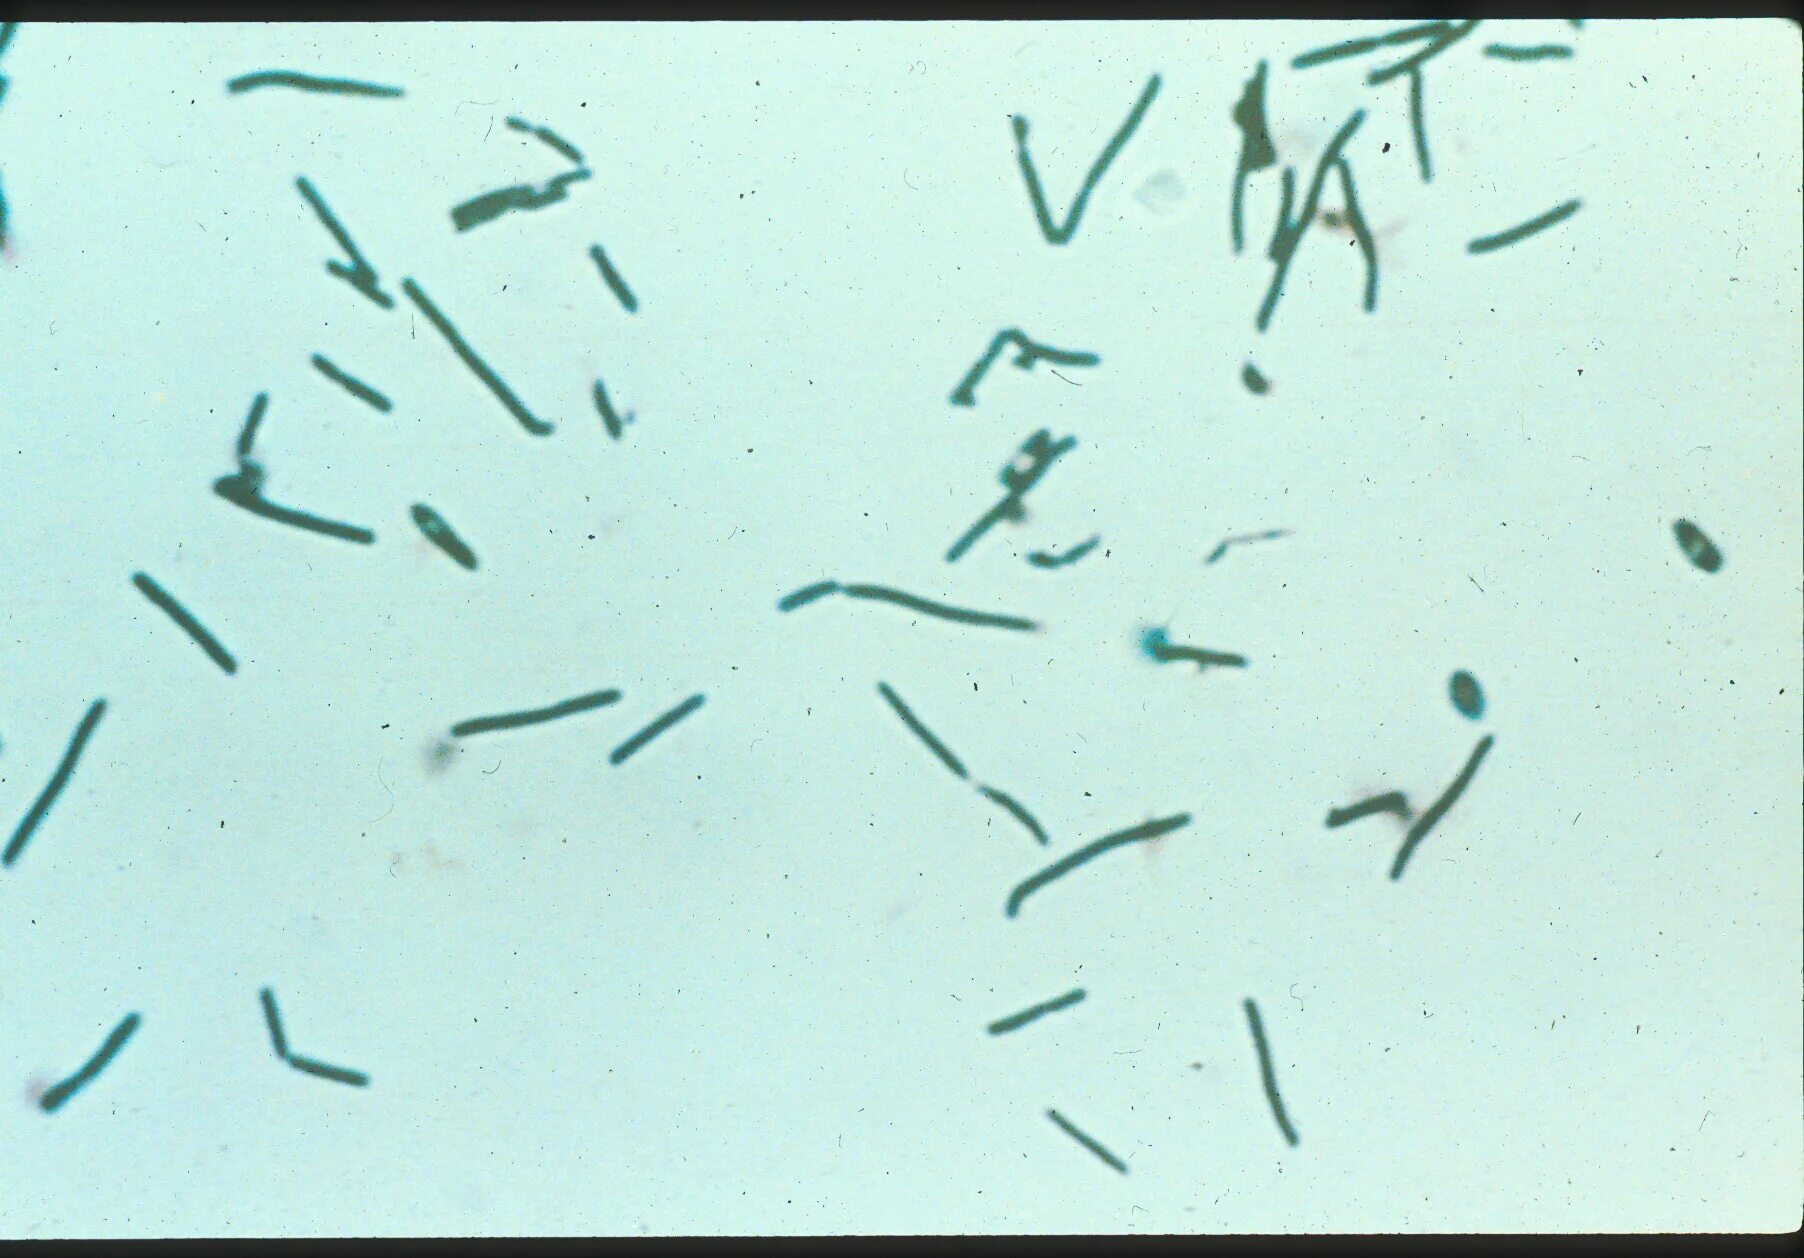 Clostridium spp. Clostridium botulinum микроскоп. Clostridium chauvoei возбудитель. Клостридия диффициле микроскопия. Клостридии ботулизма.